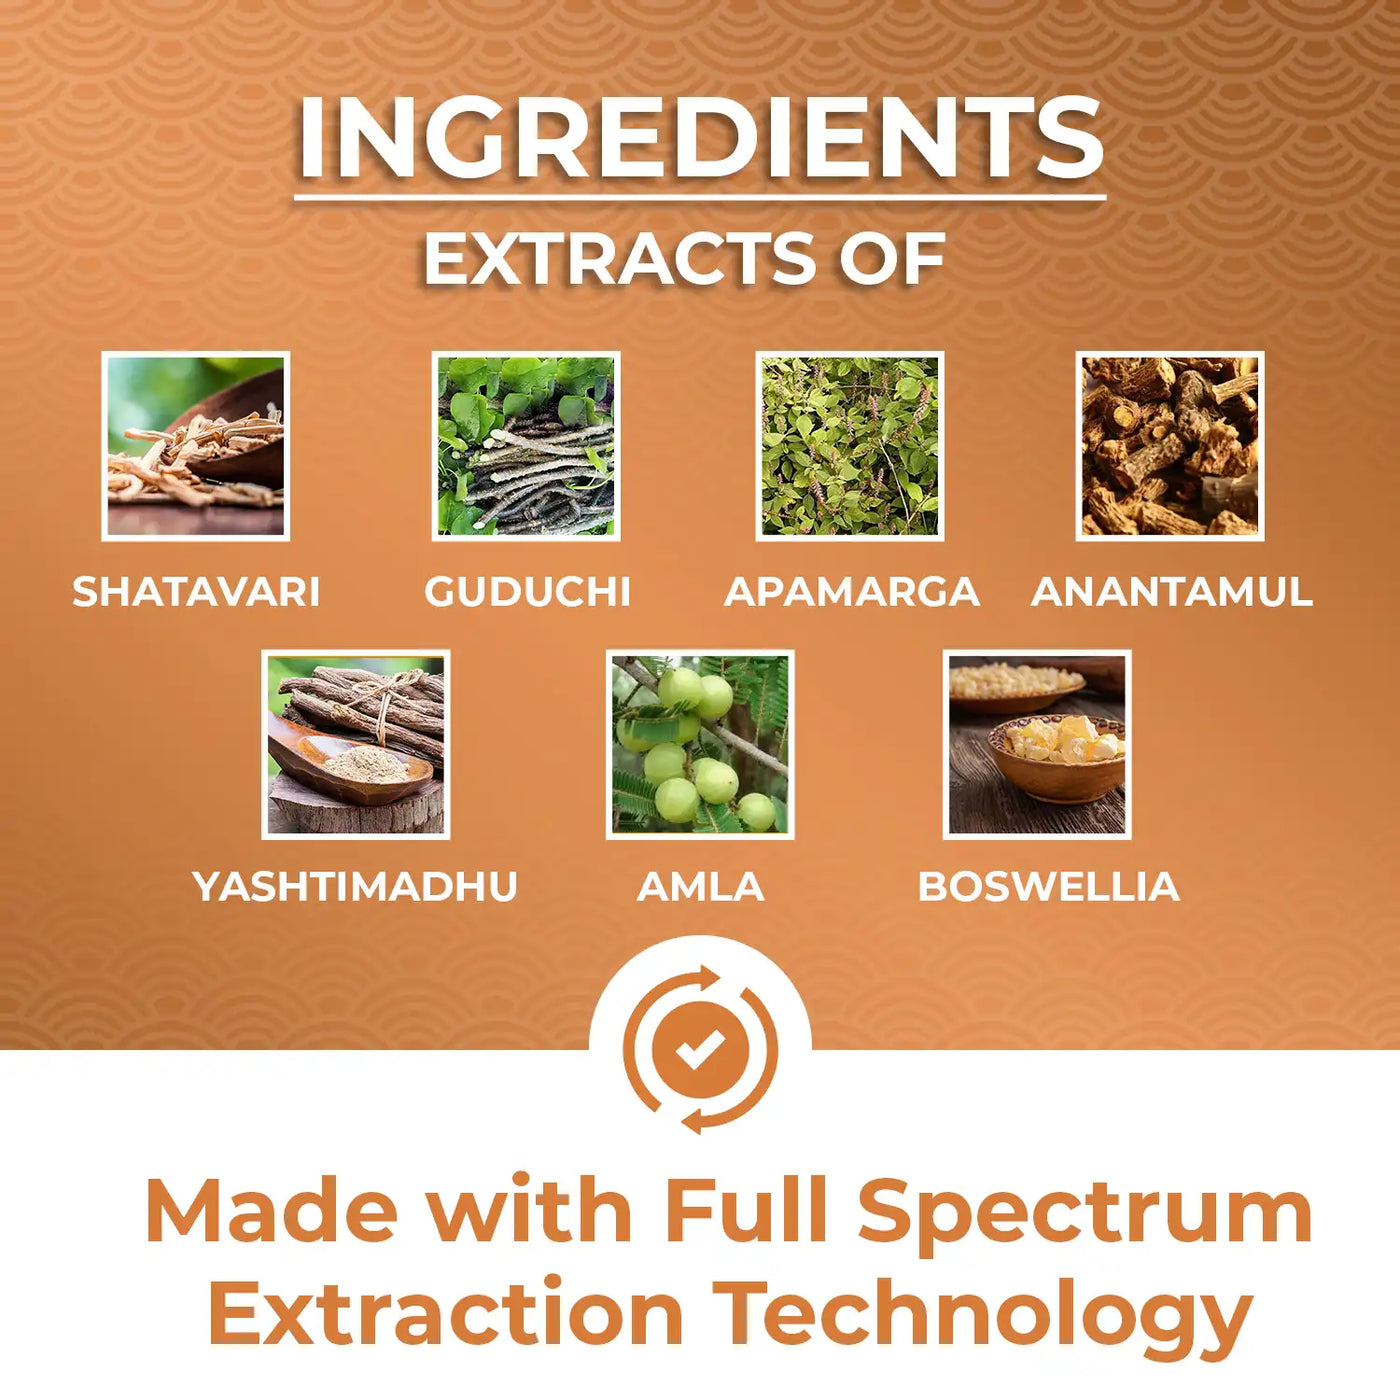 made with powerful ayurvedic extracts of shatavari, guduchi, apamarga, anatmul, amla, boswellia and licorice. 